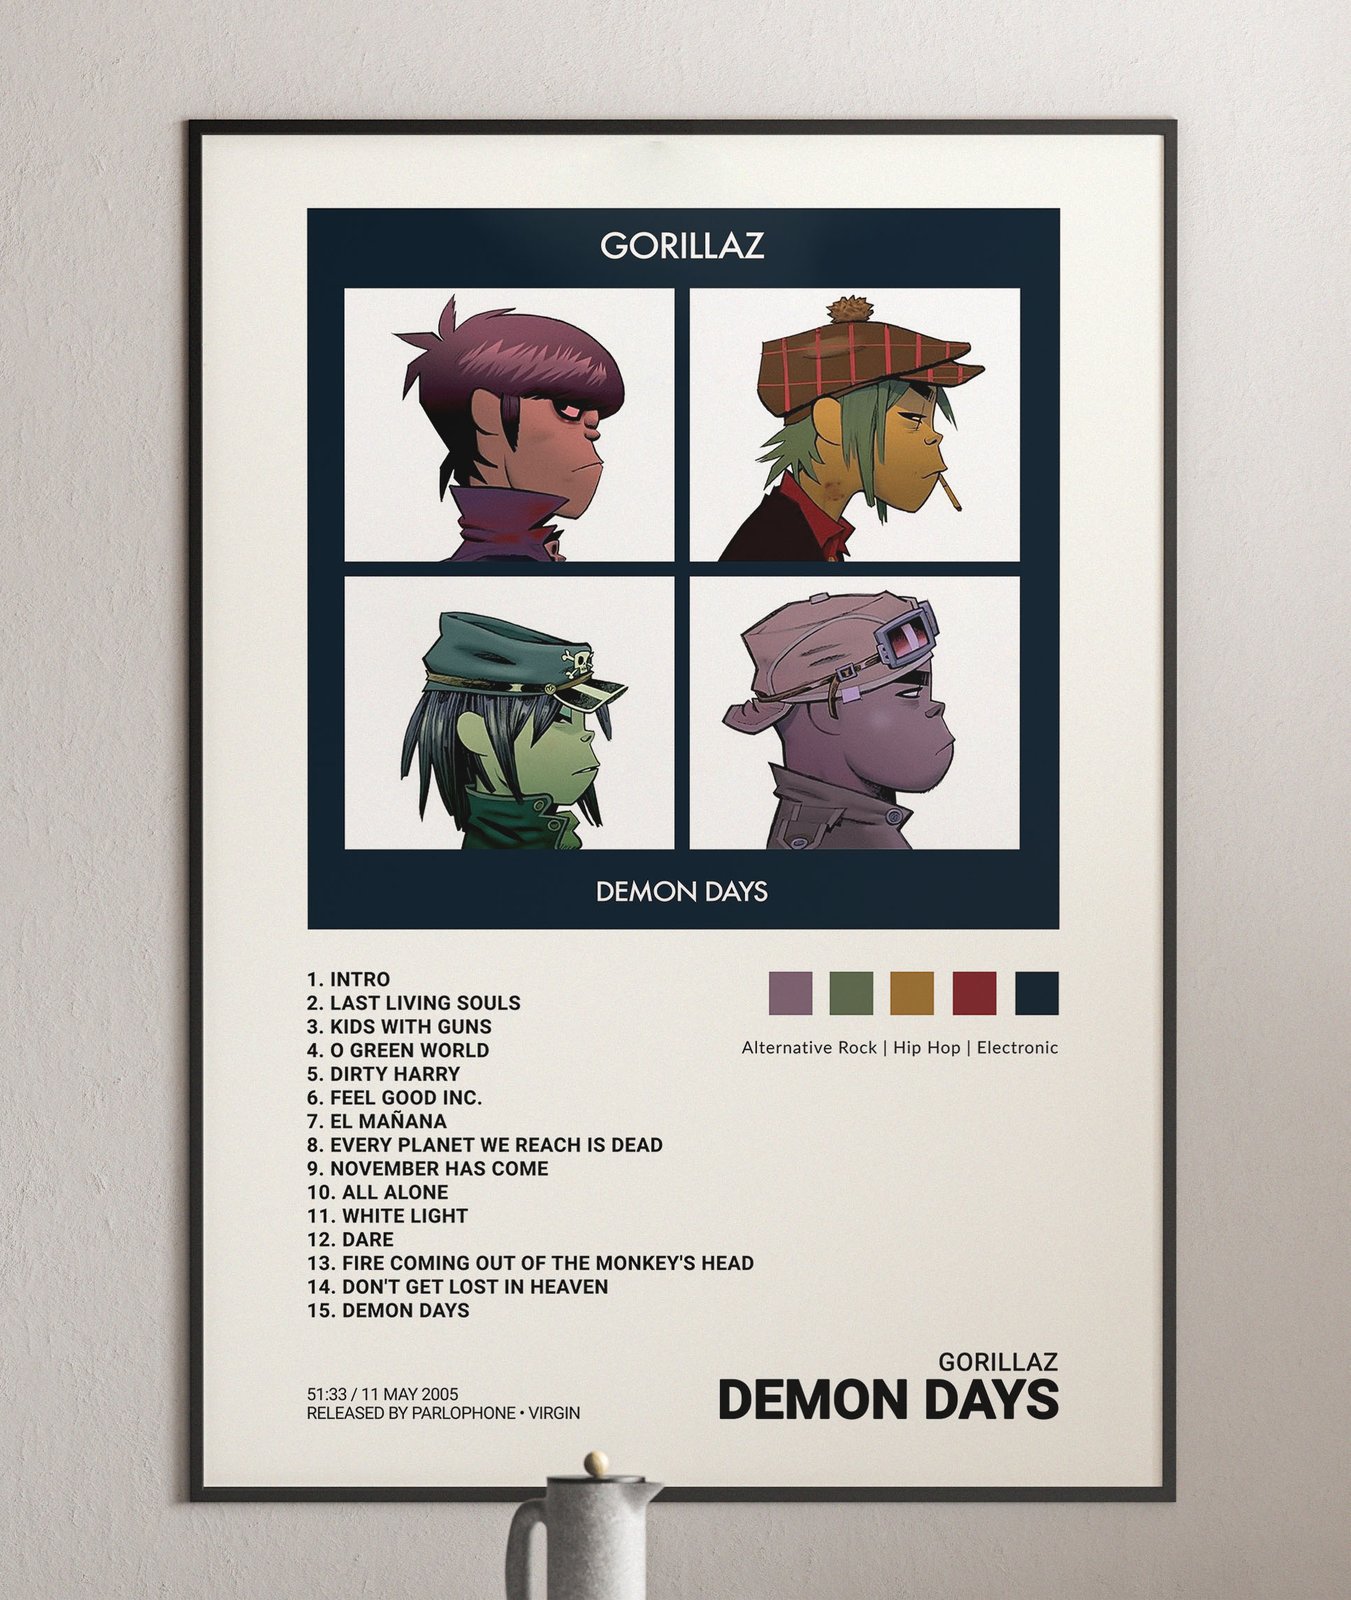 gorillaz demon days album cover info